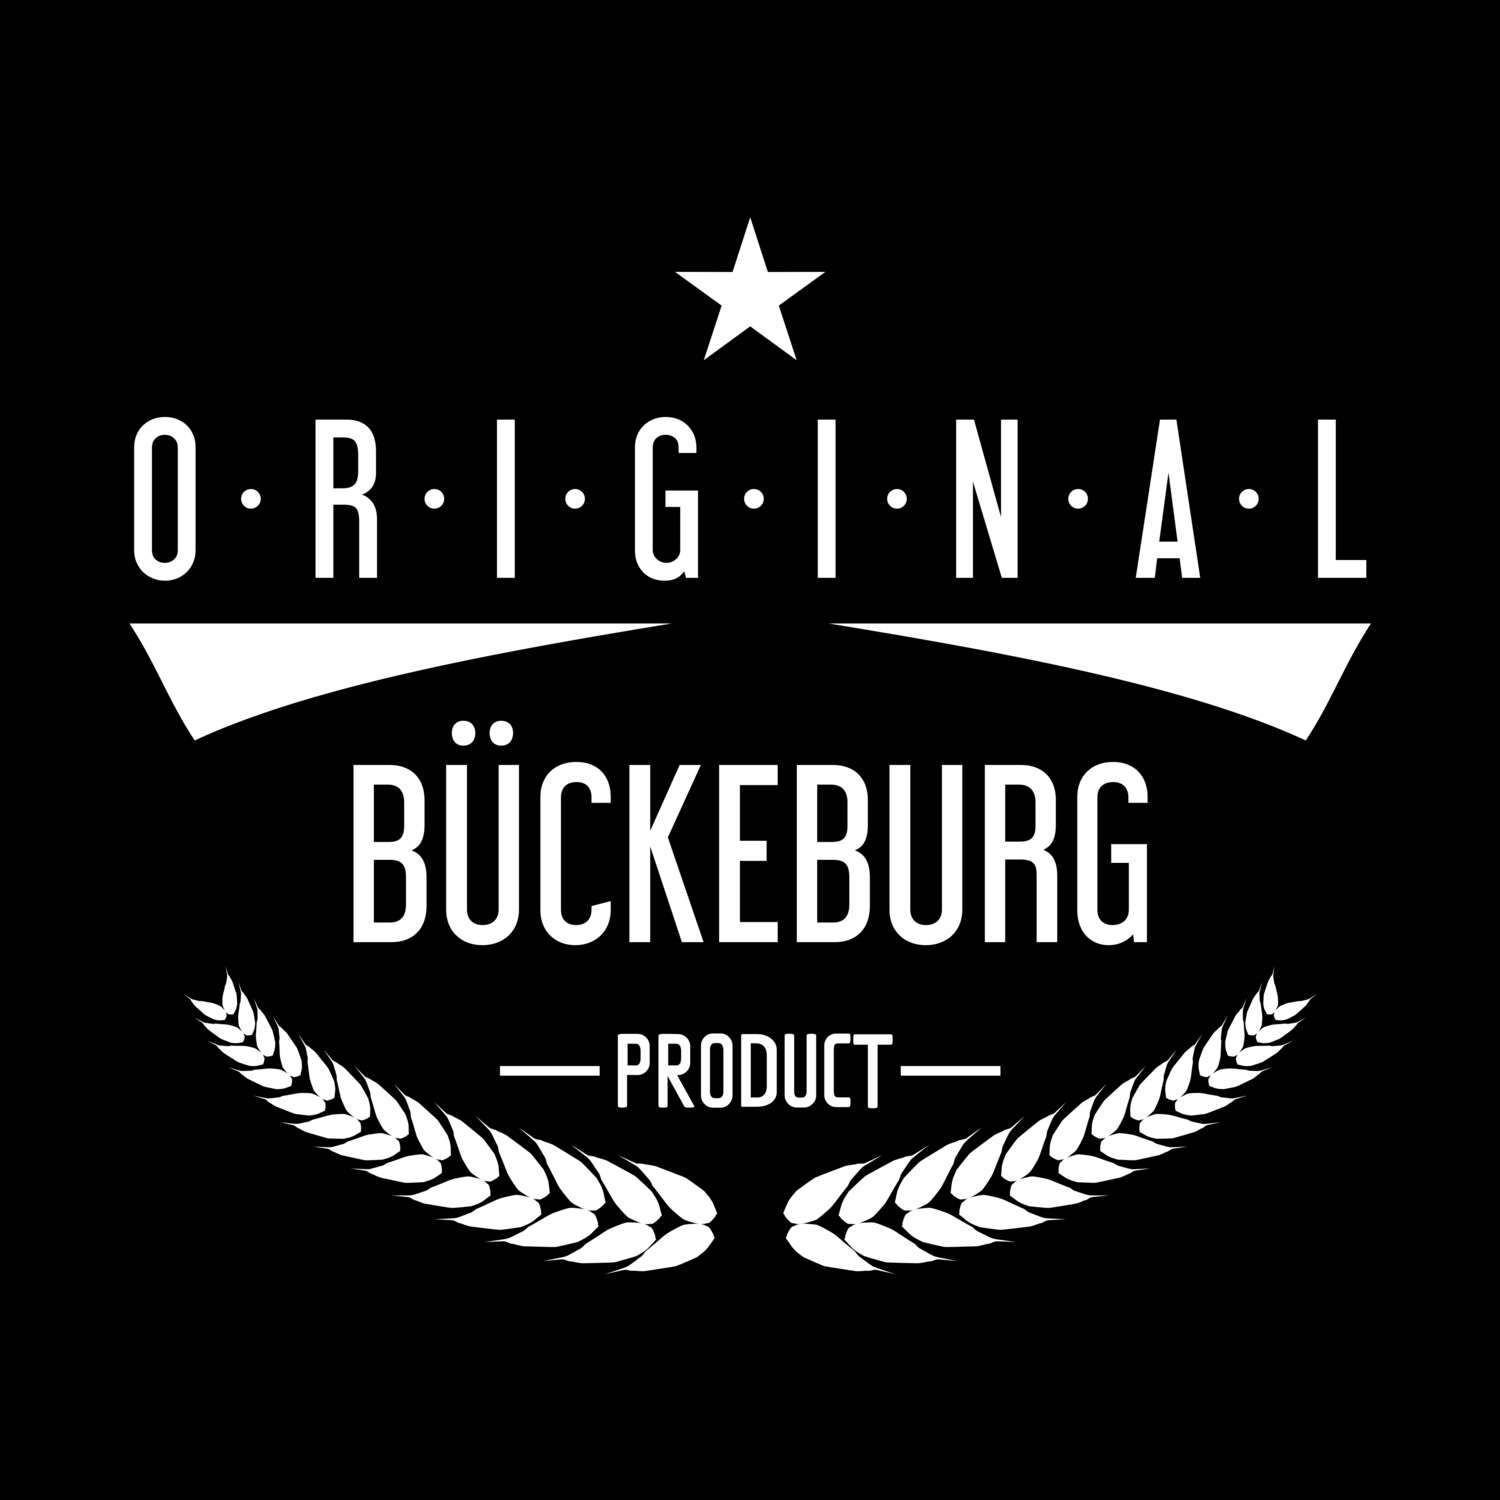 Bückeburg T-Shirt »Original Product«